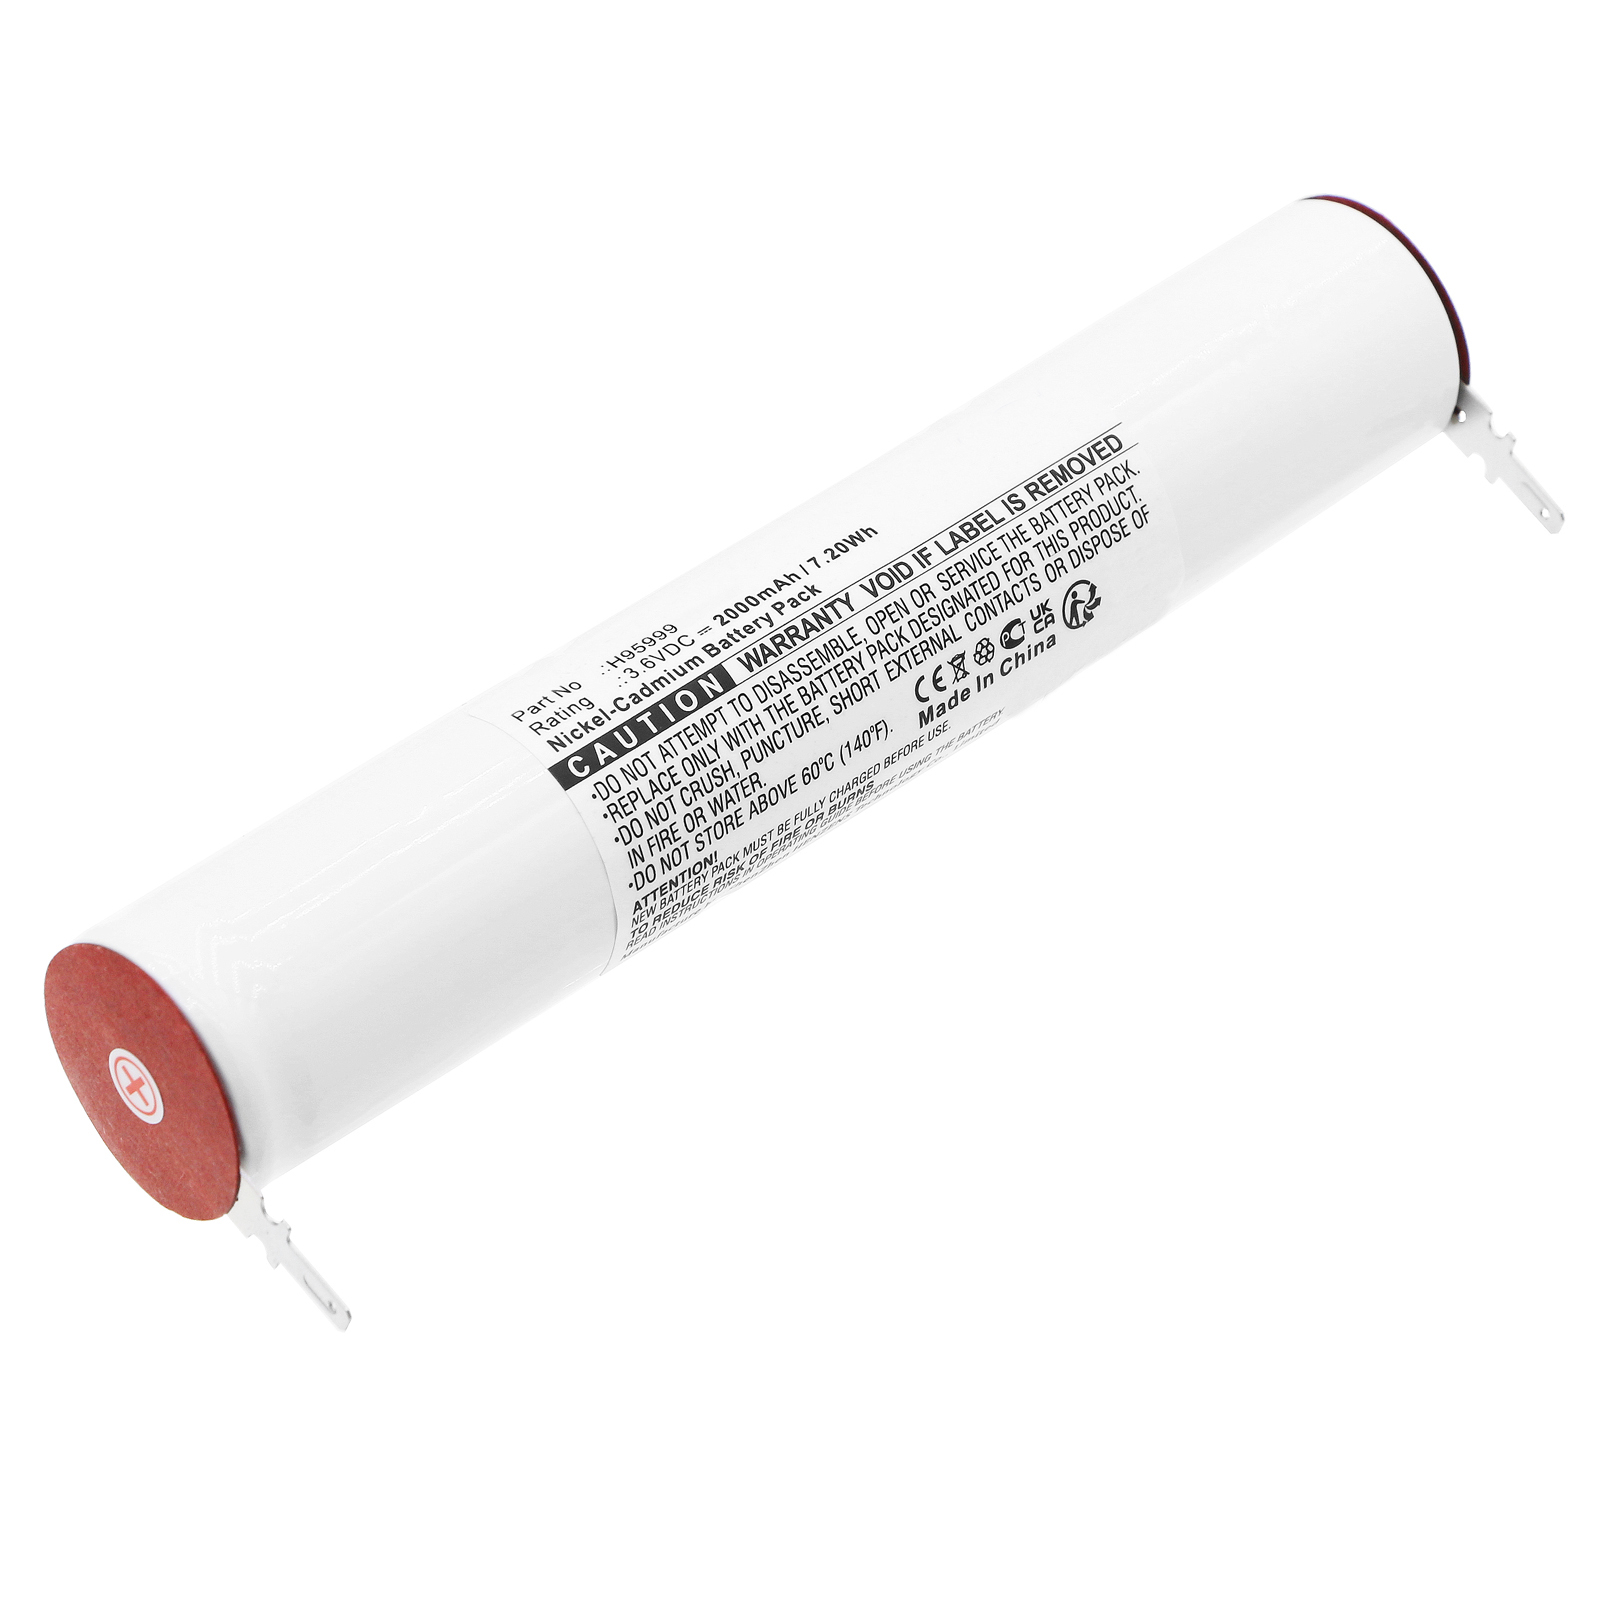 Synergy Digital Emergency Lighting Battery, Compatible with Legrand H95999 Emergency Lighting Battery (Ni-CD, 3.6V, 2000mAh)